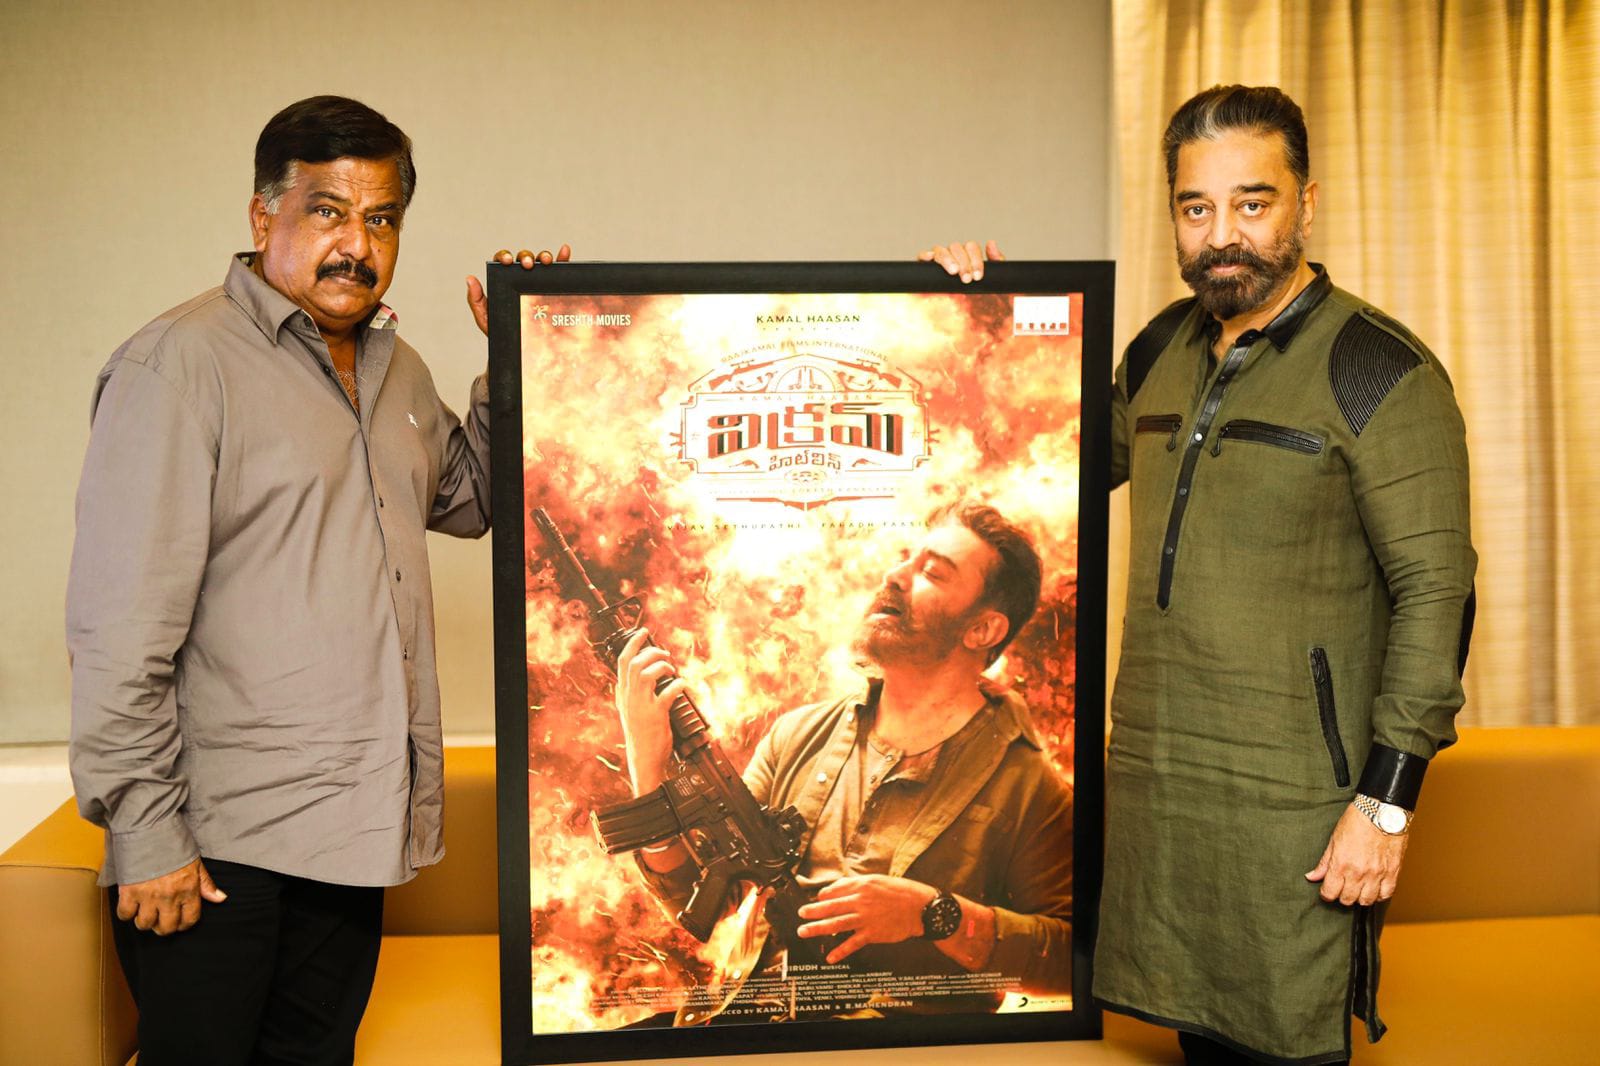  Sreshth Movies releasing Vikram in a massive manner in Telugu states